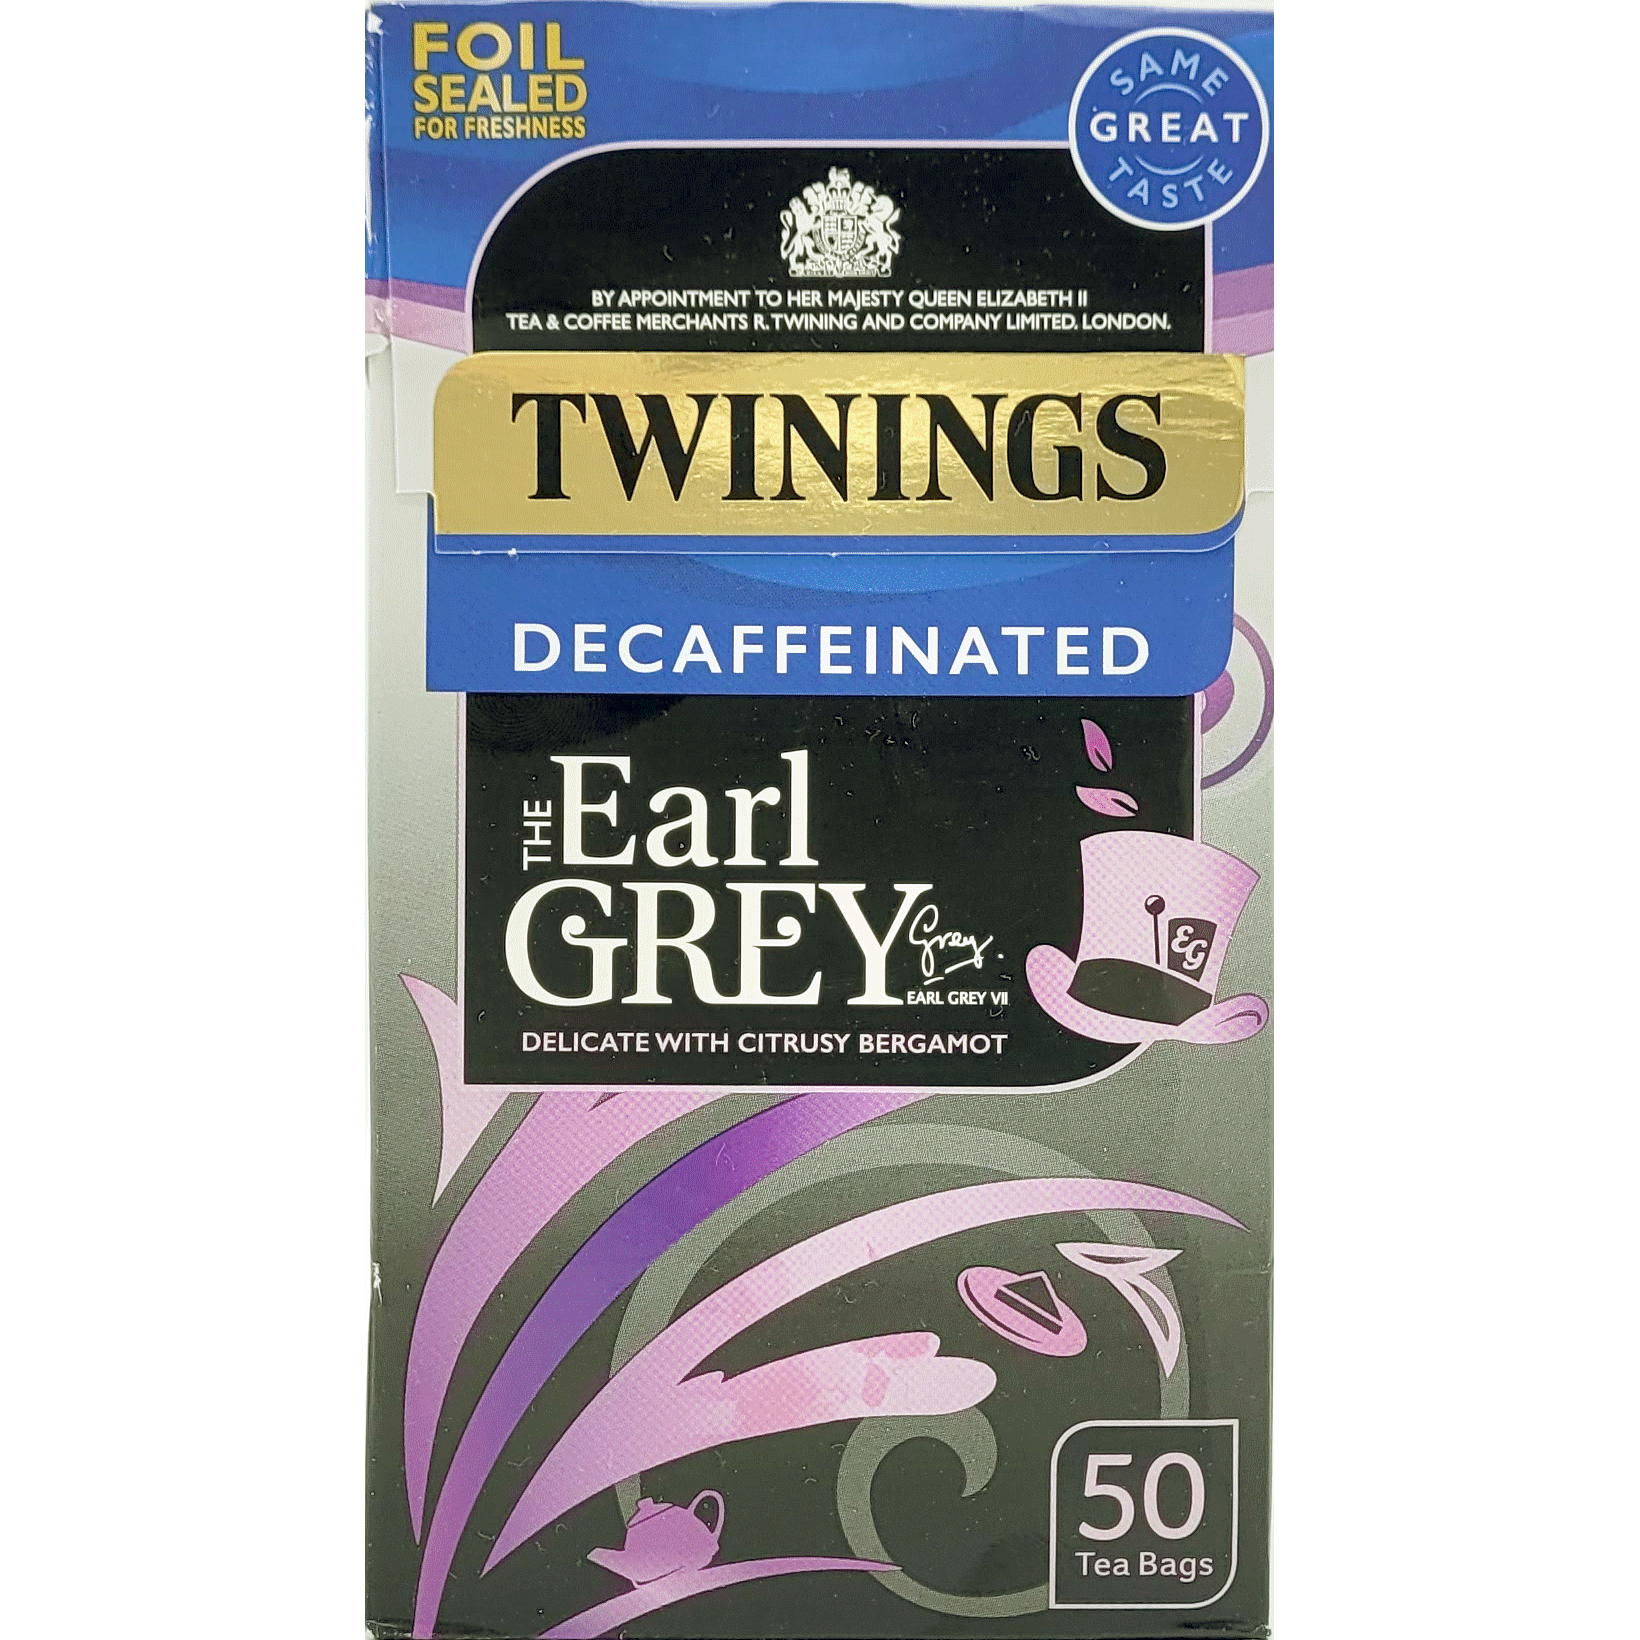 Twinings Earl Grey Decaffeinated 50 bags